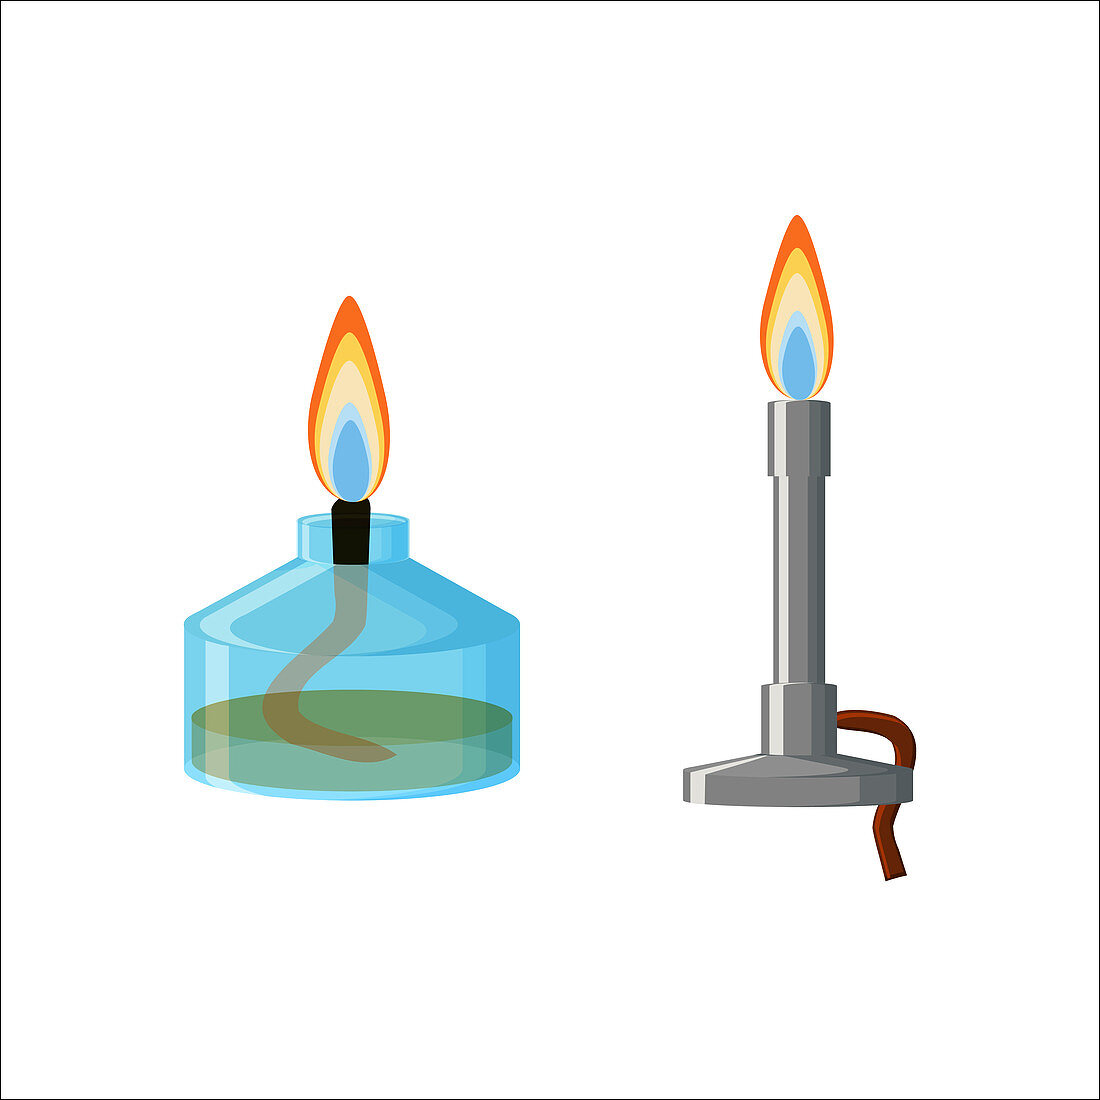 Alcohol spirit burner and Bunsen burner, illustration